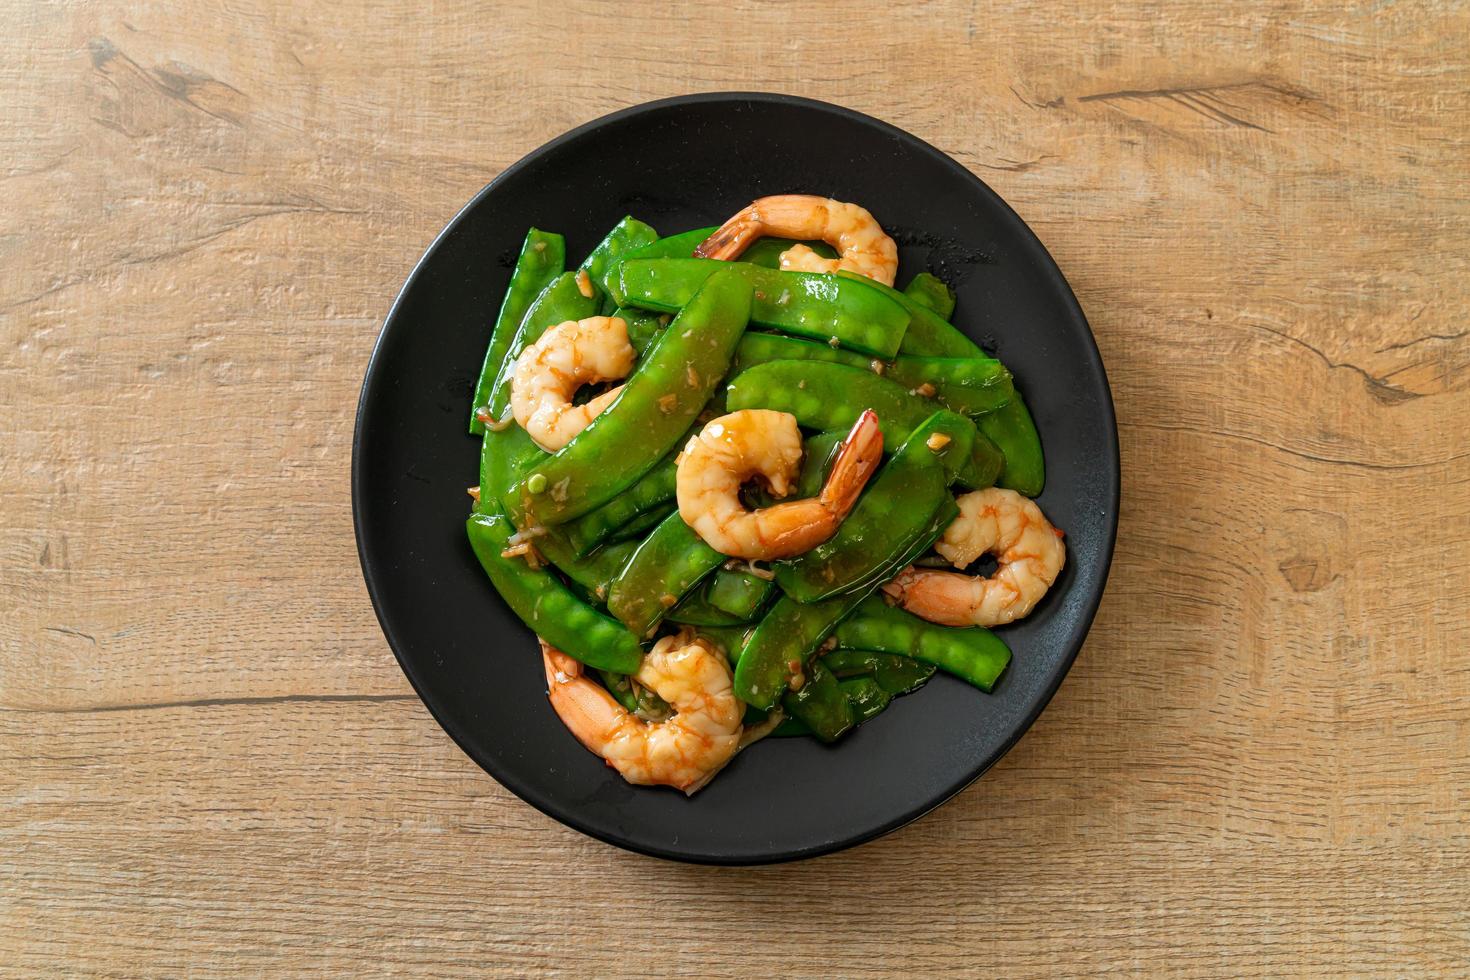 Stir-fried green peas with shrimp - homemade food style photo